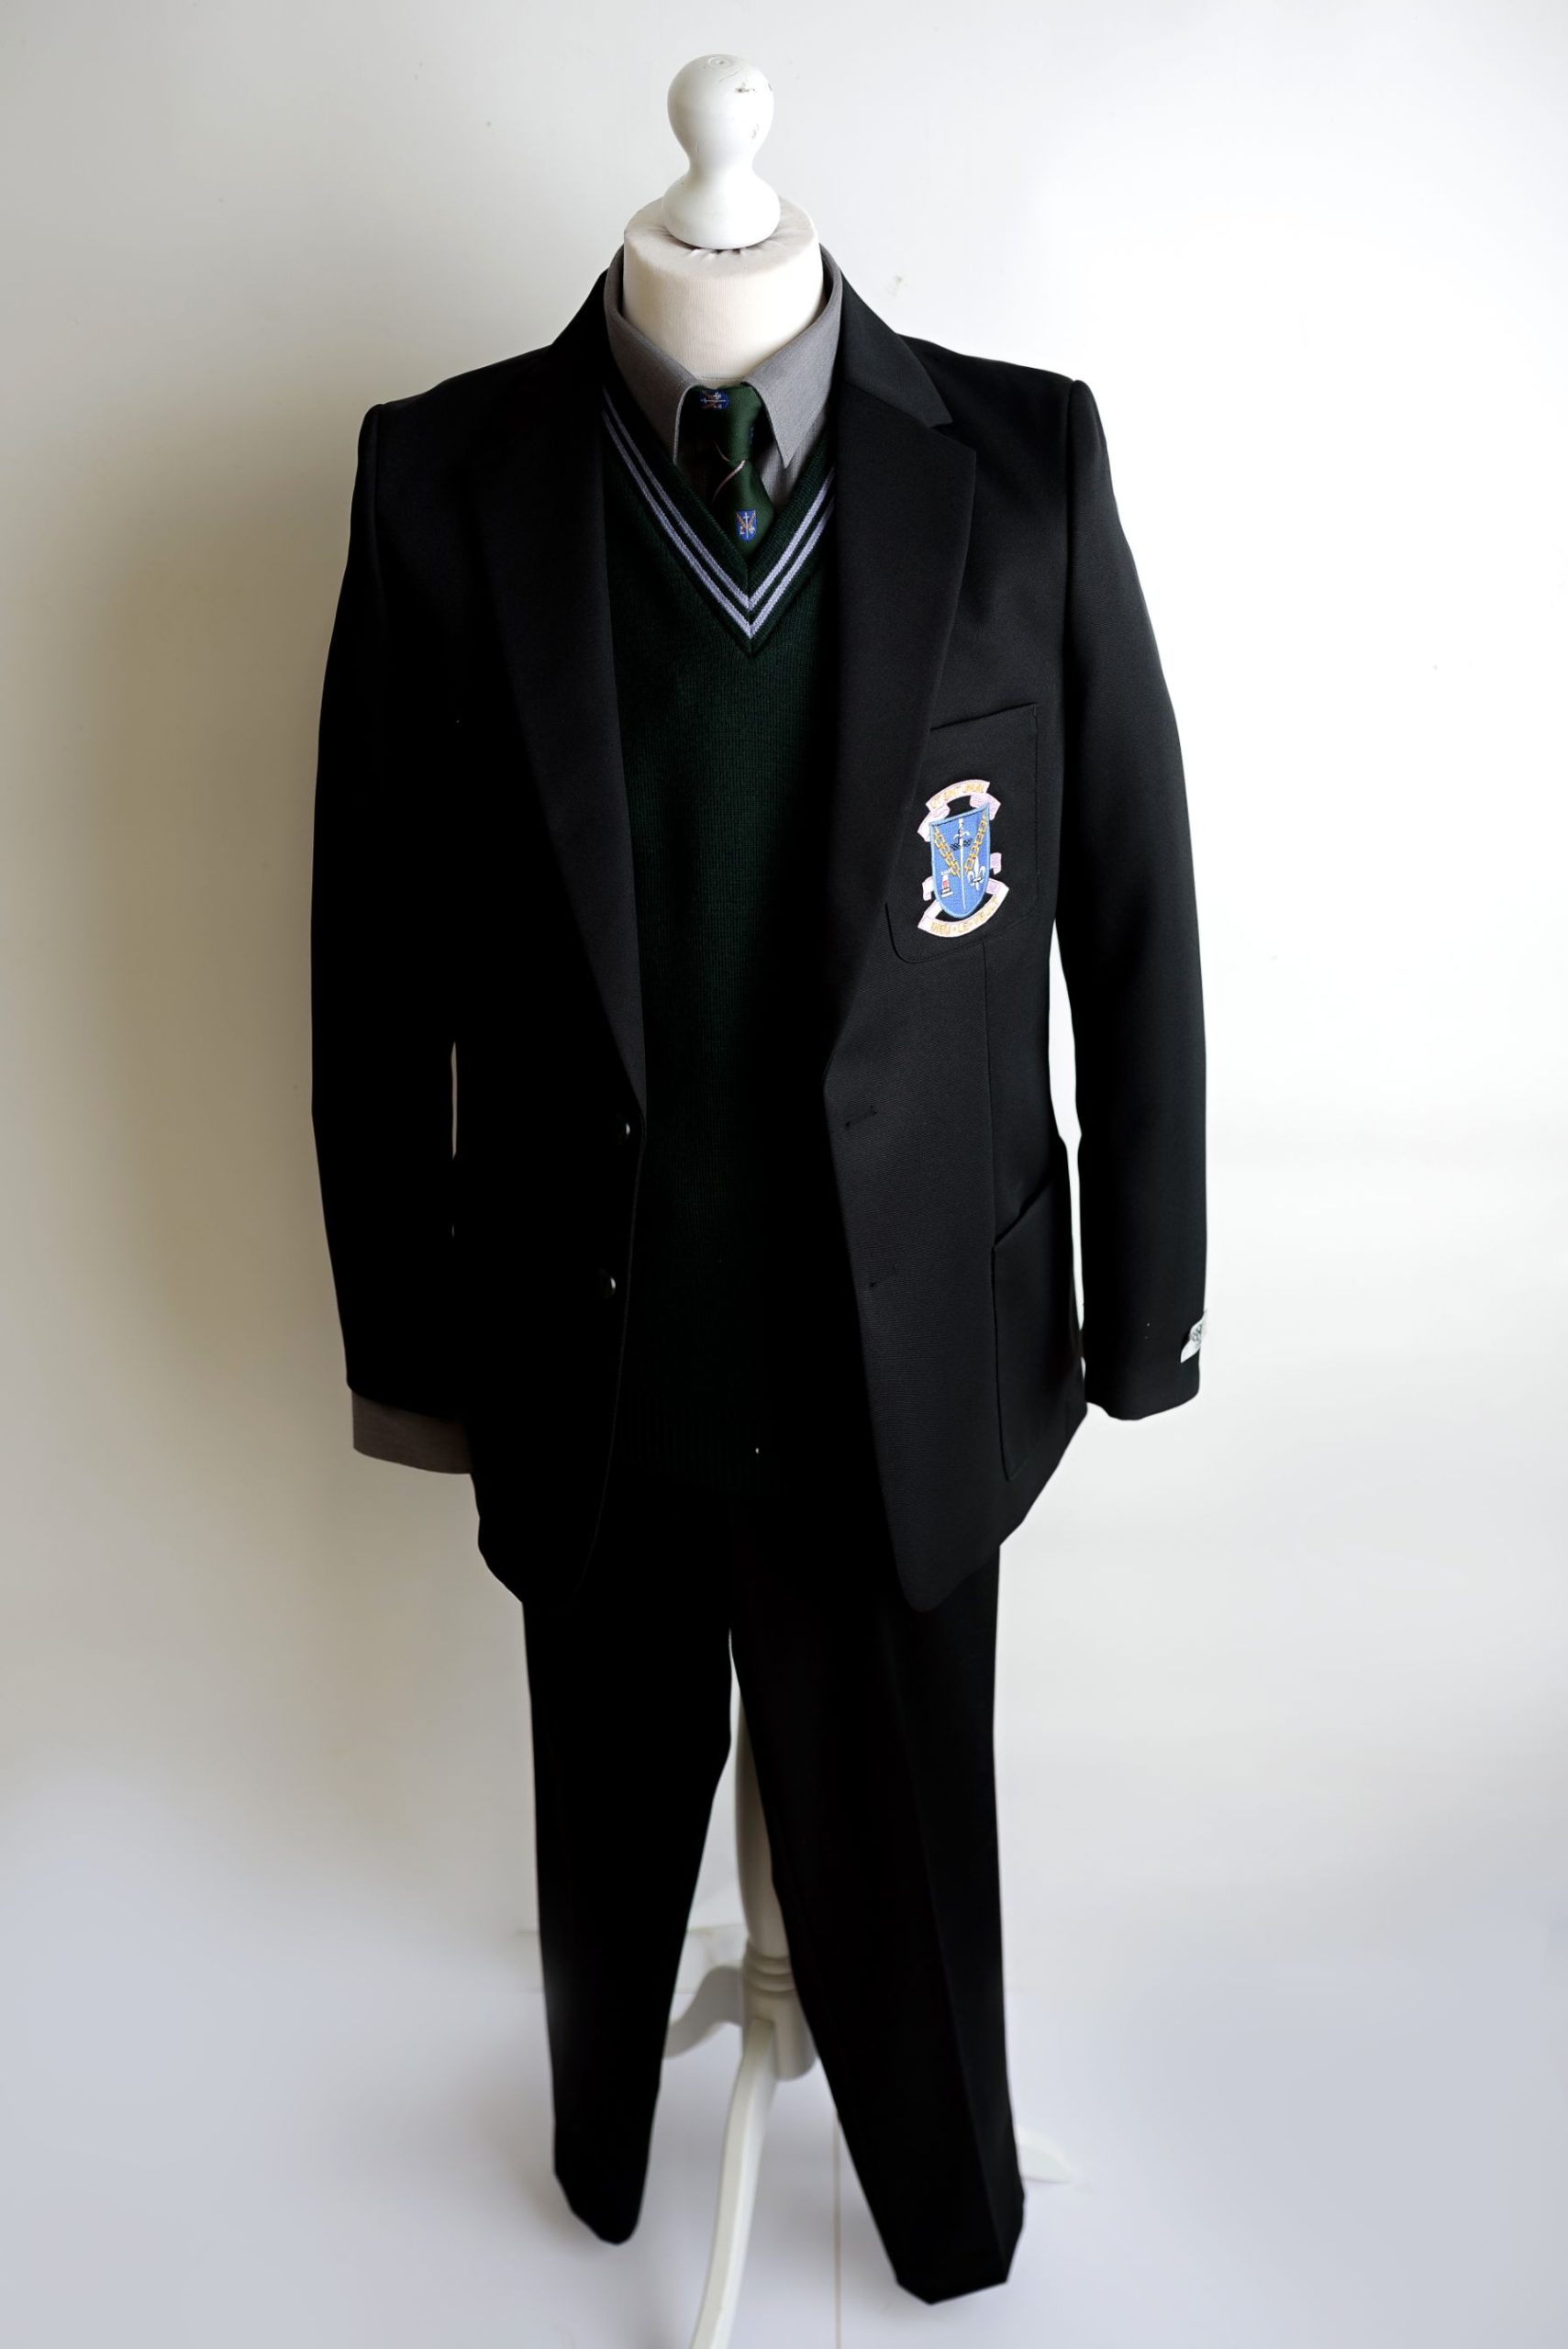 St Louis Grammar School boys uniform